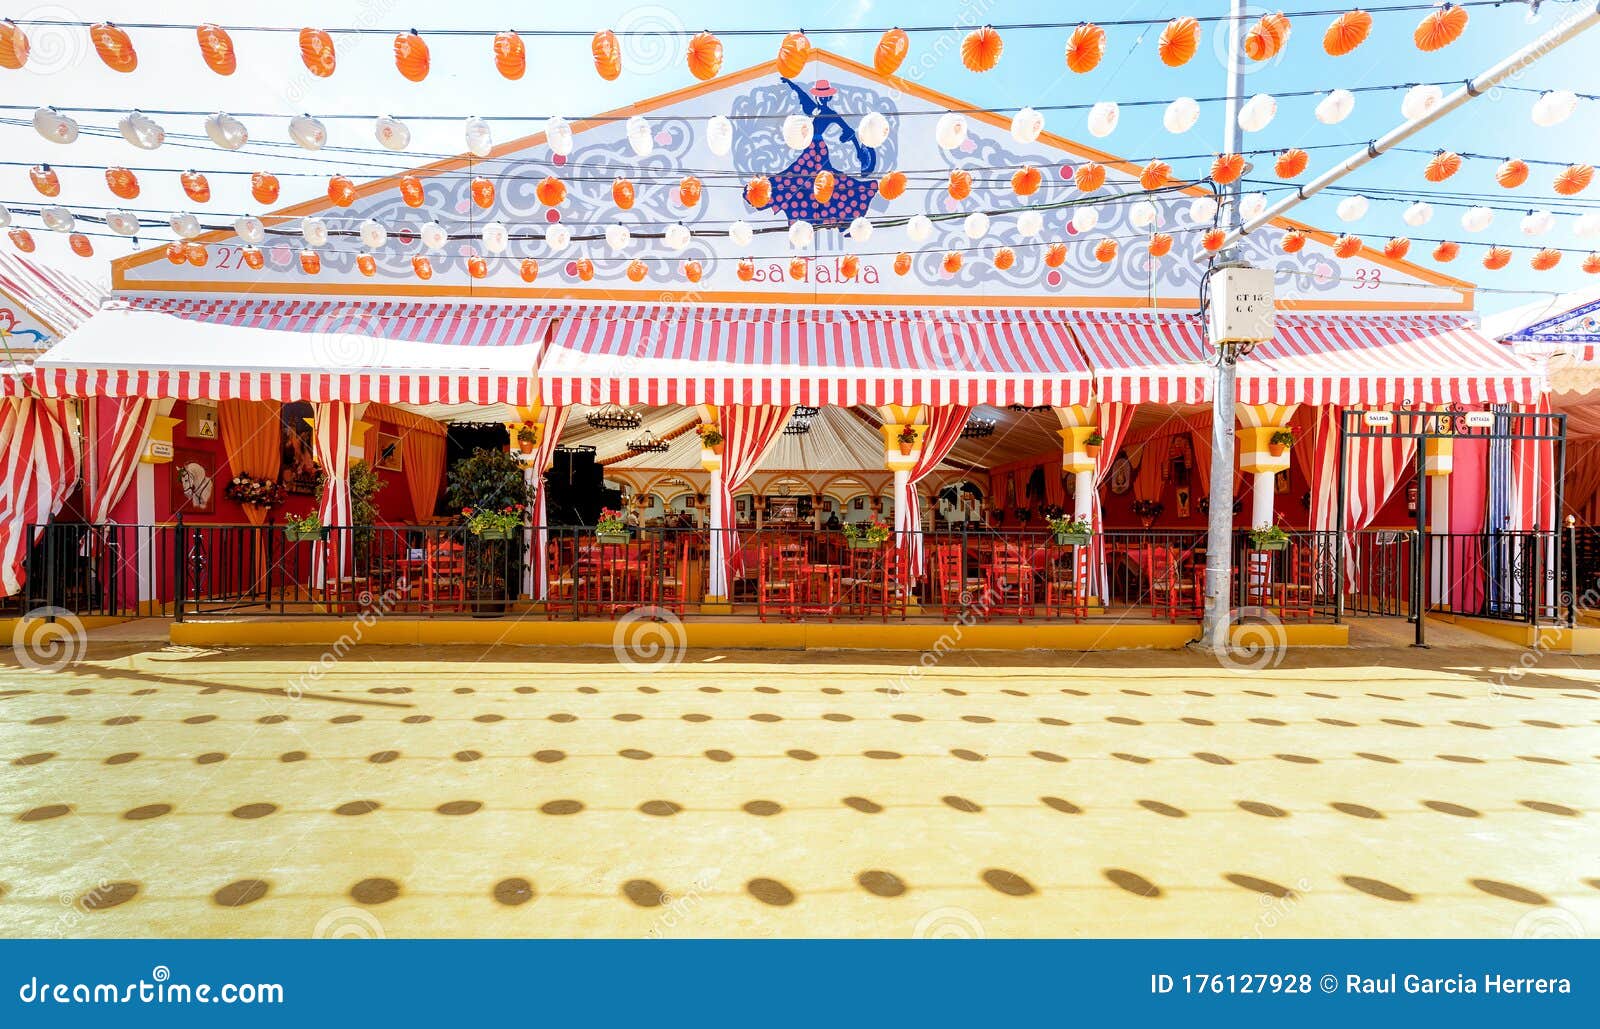 panoramic view of beautiful decorated caseta `fair tent` at the april fair feria de abril, seville fair feria de sevilla, and